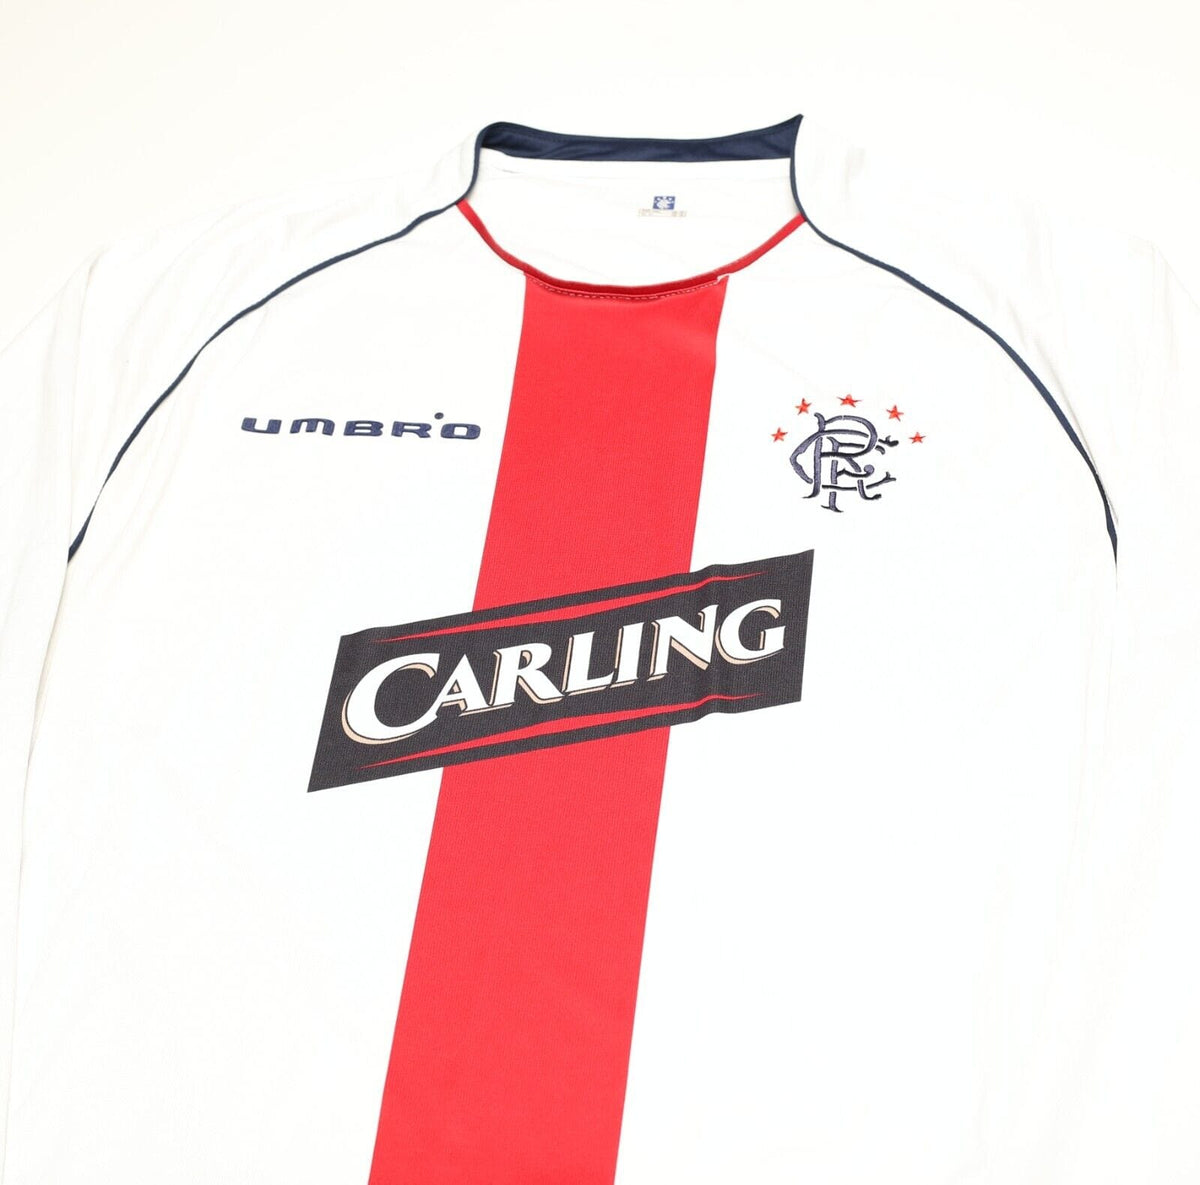 Celtic Third football shirt 2005 - 2007. Sponsored by Carling